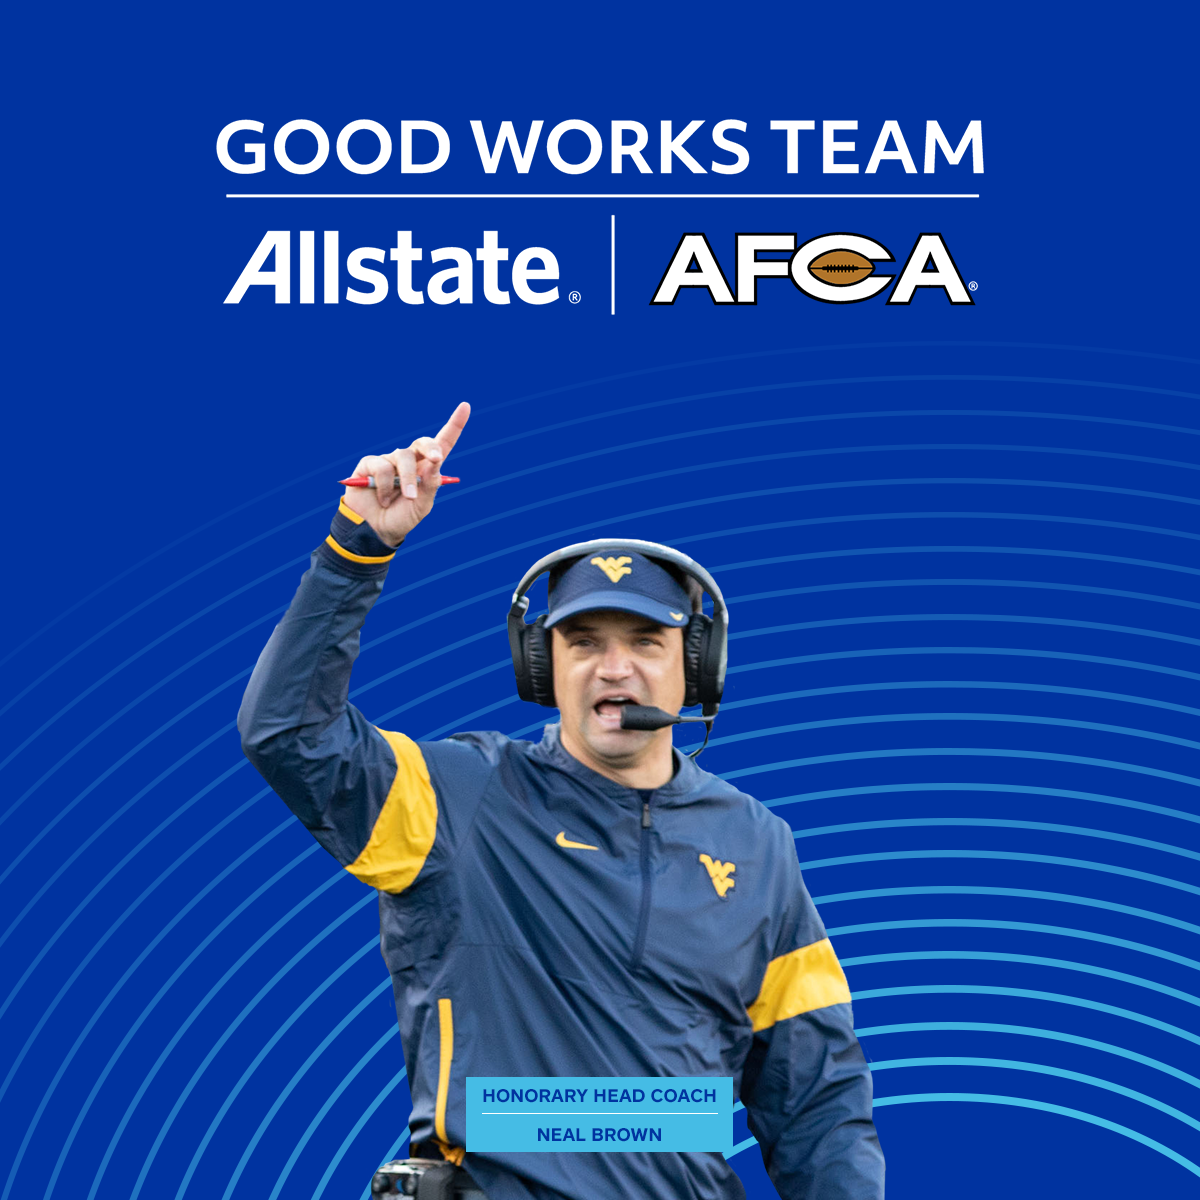 Neal Brown Allstate Good Works Team Head Coach